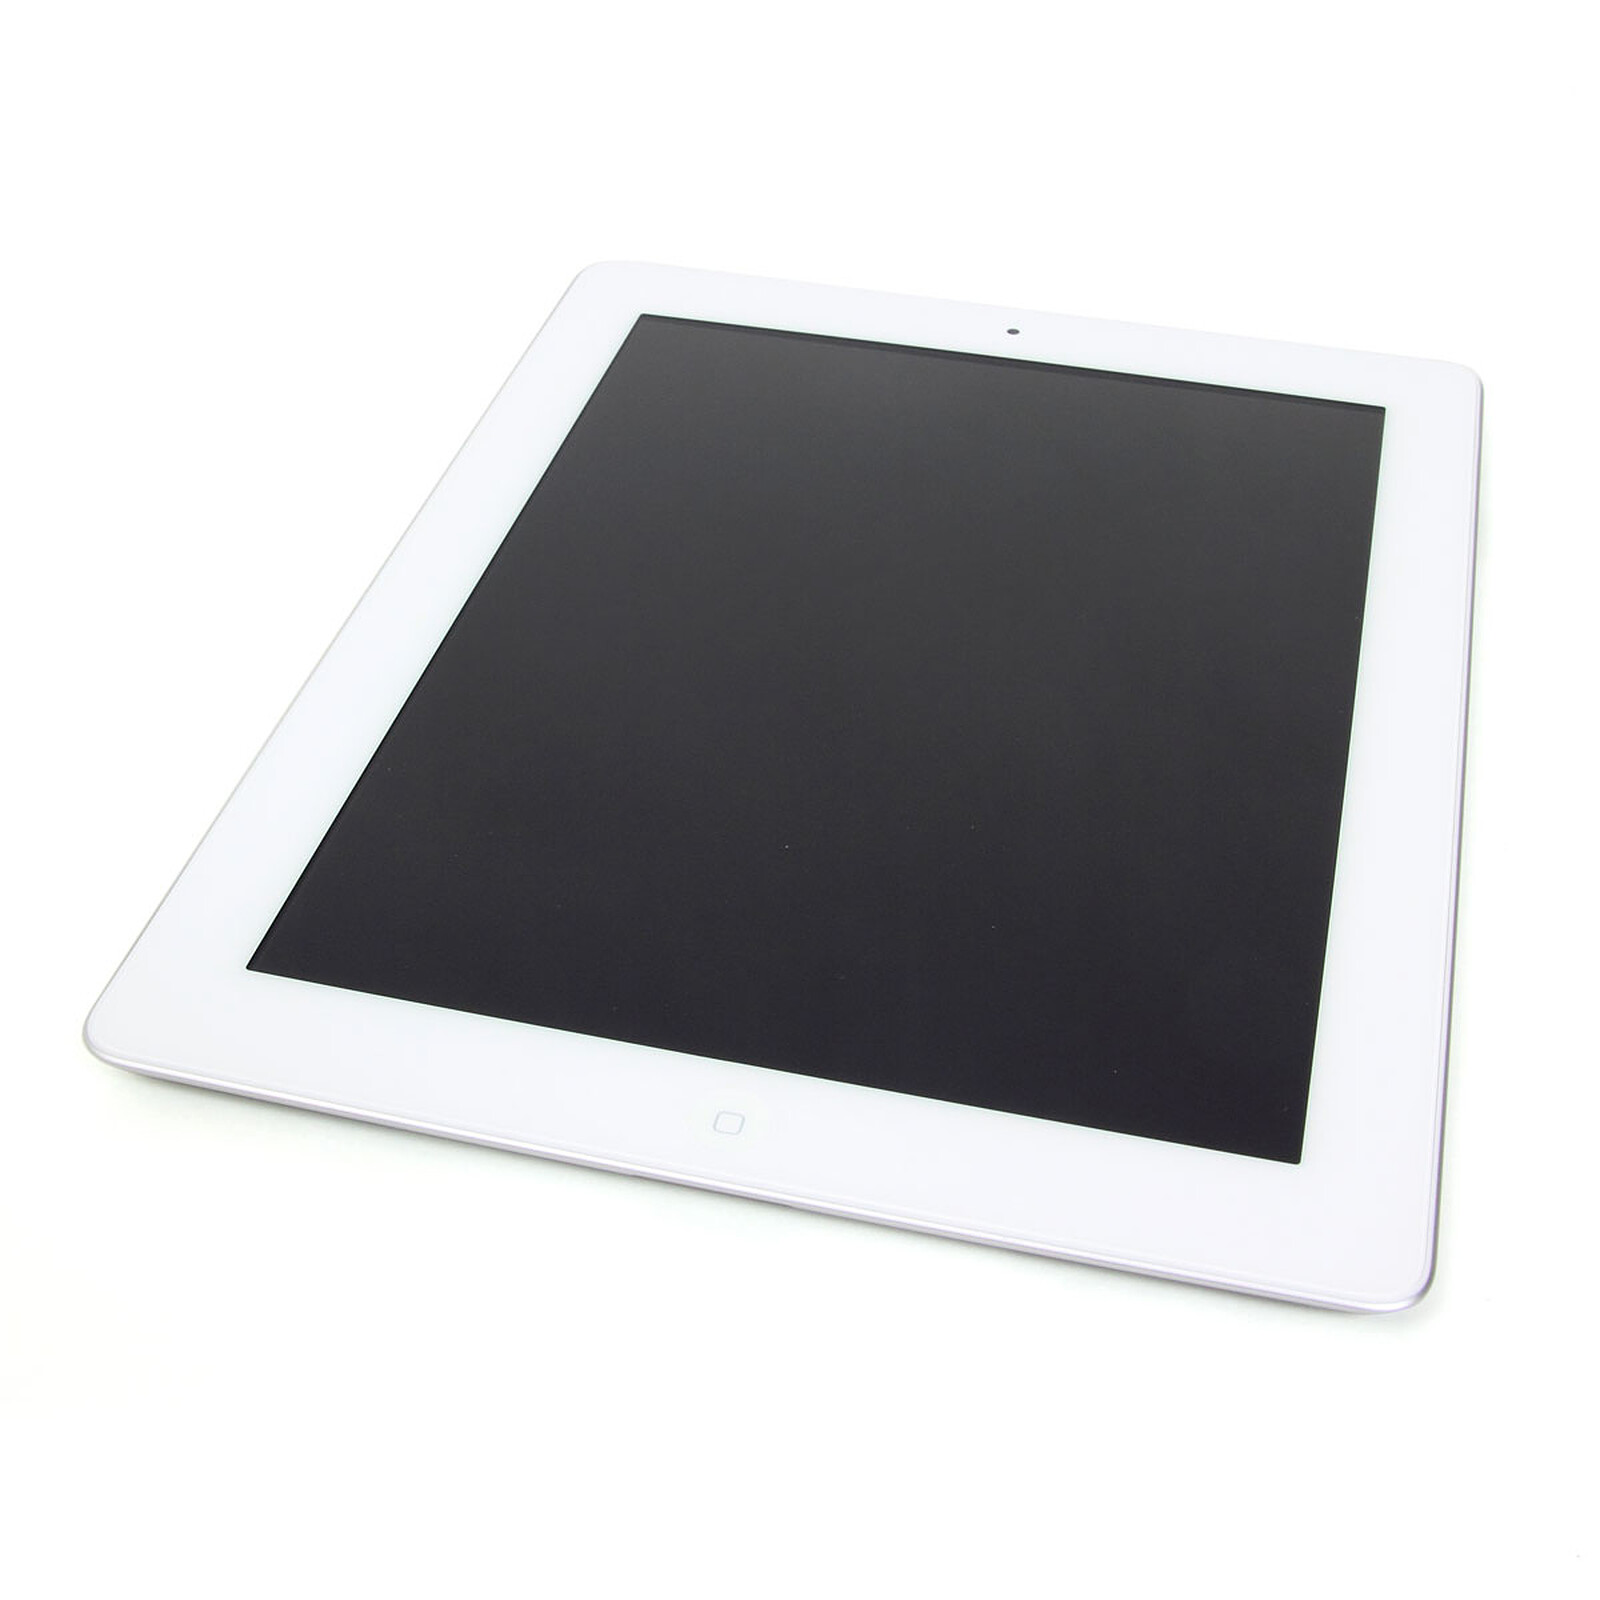 iPad 2 - Caractéristiques techniques (FR)